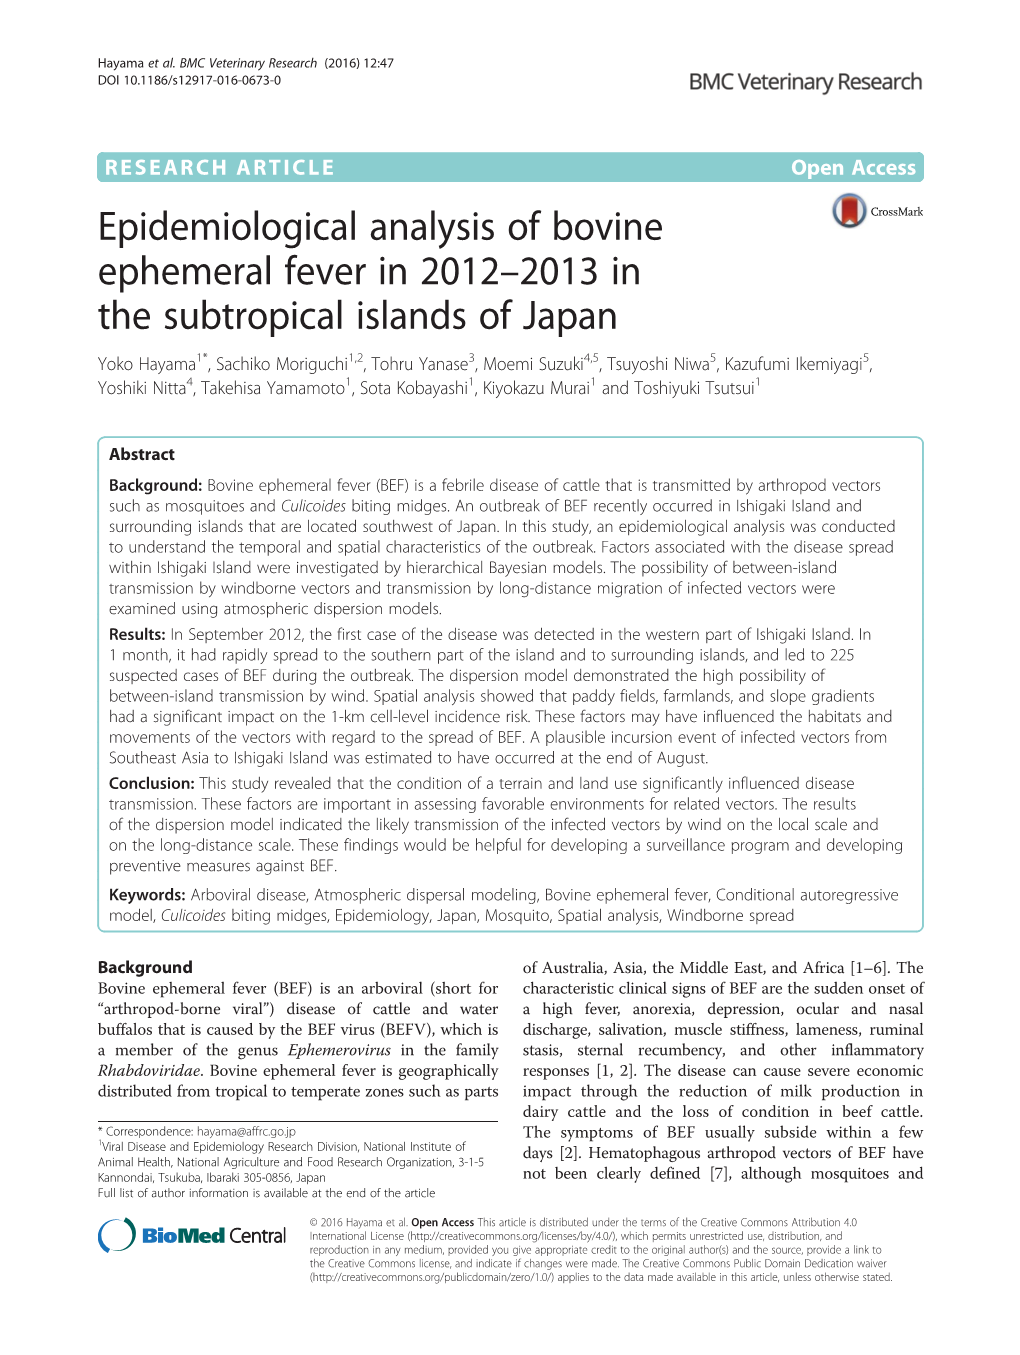 Epidemiological Analysis of Bovine Ephemeral Fever in 2012–2013 In